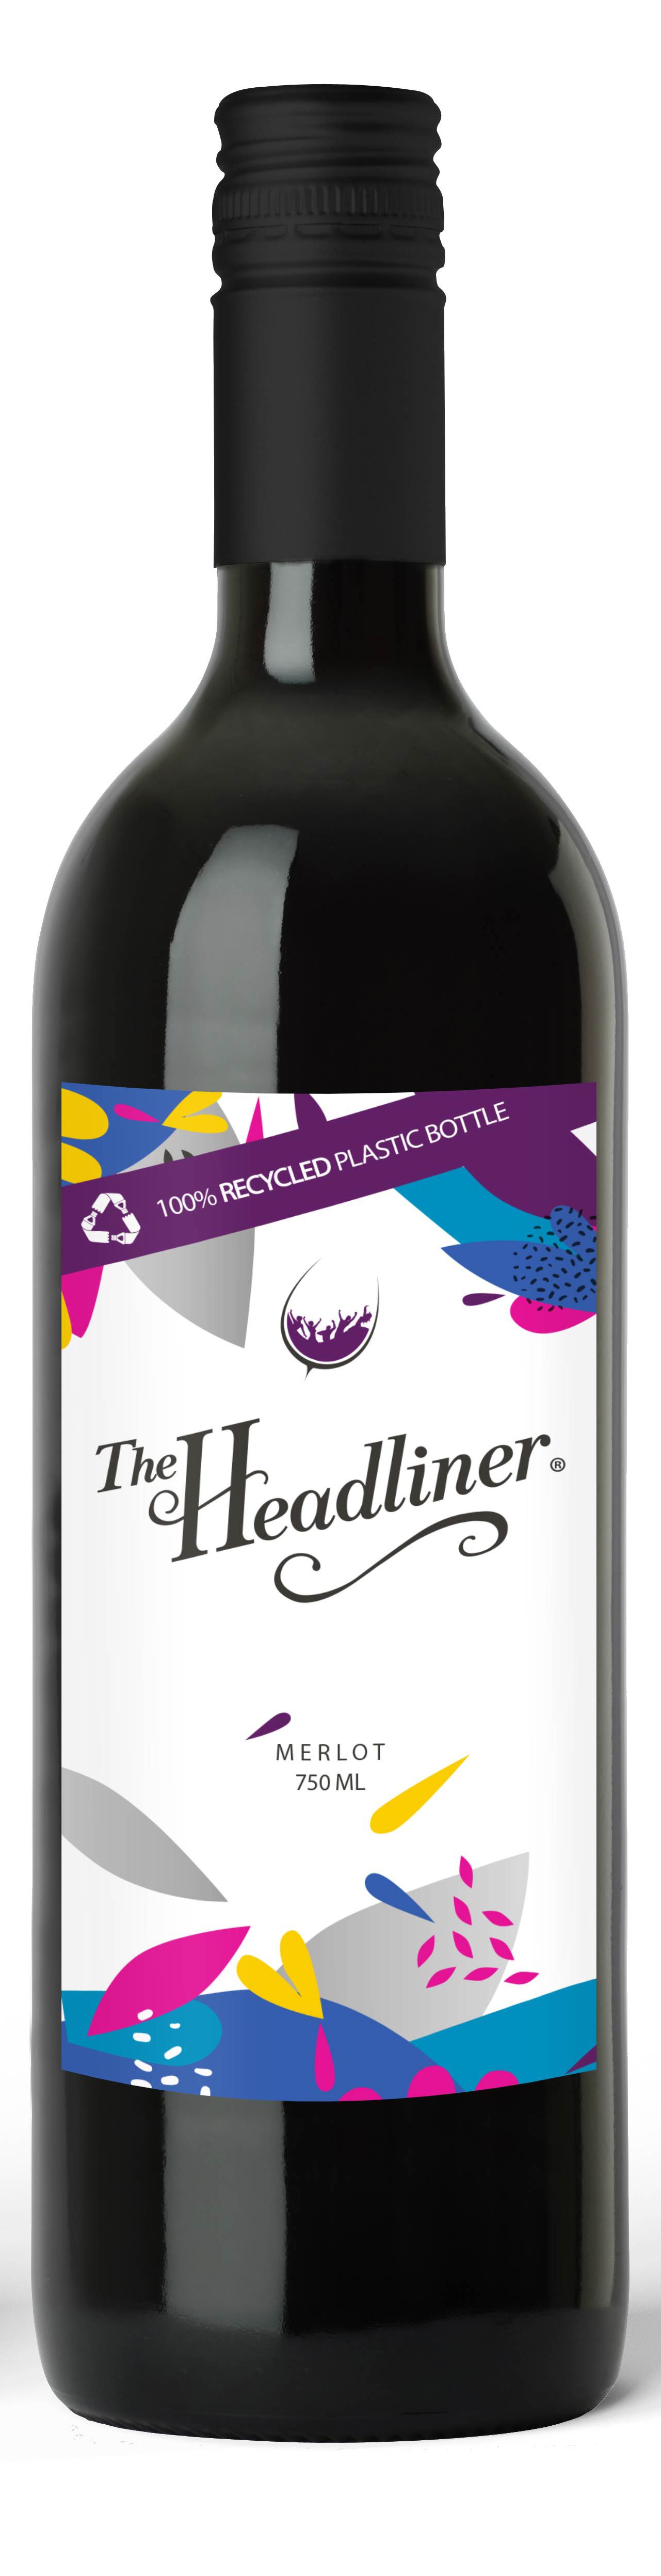 The Headliner wine